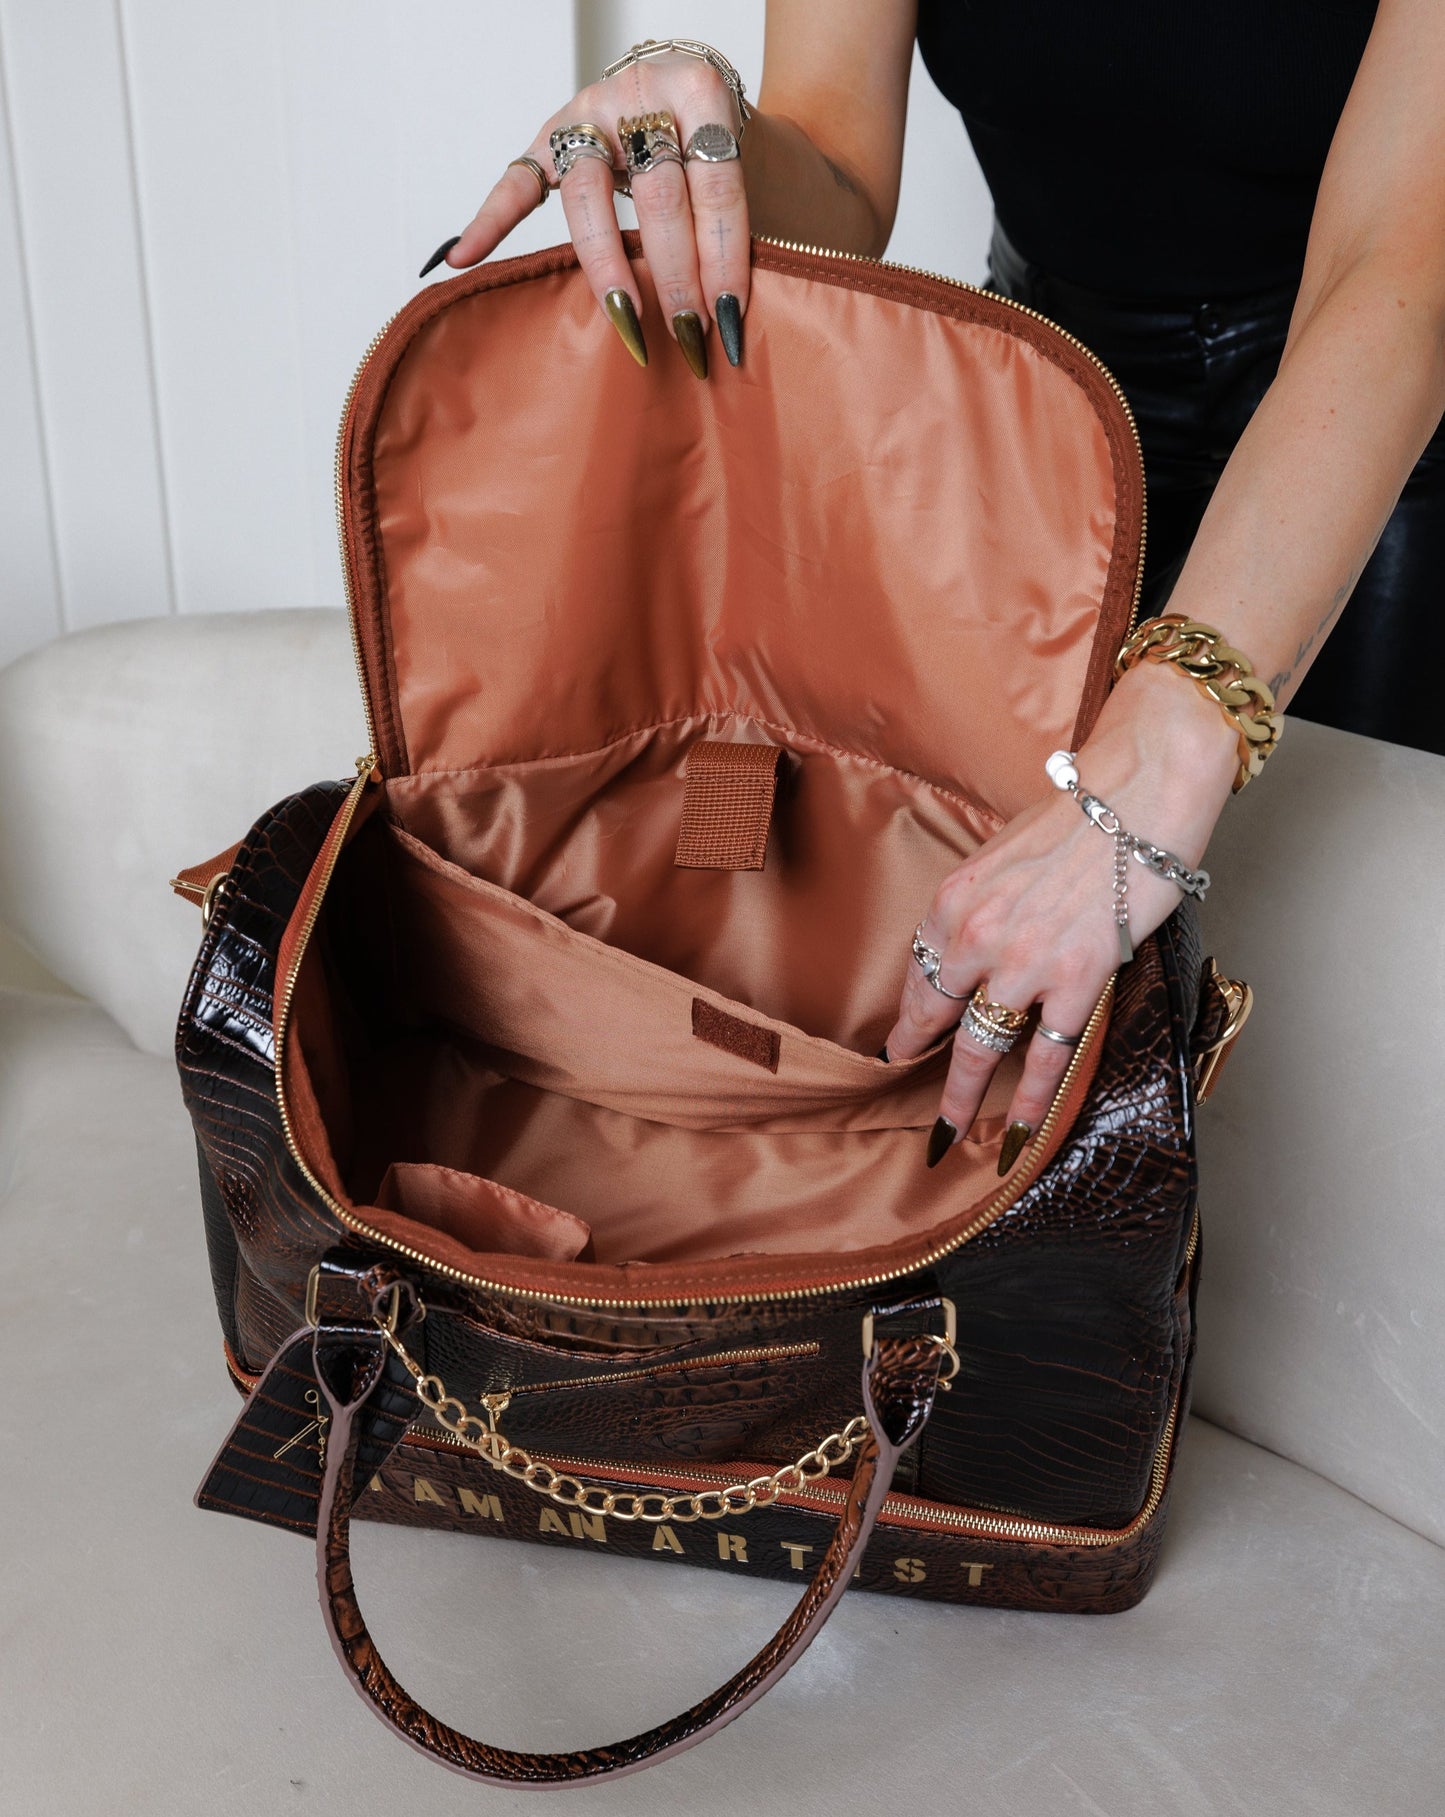 Artisan Series: Artem “I Am An Artist” Brown Vegan Leather Luxury Tote Bag